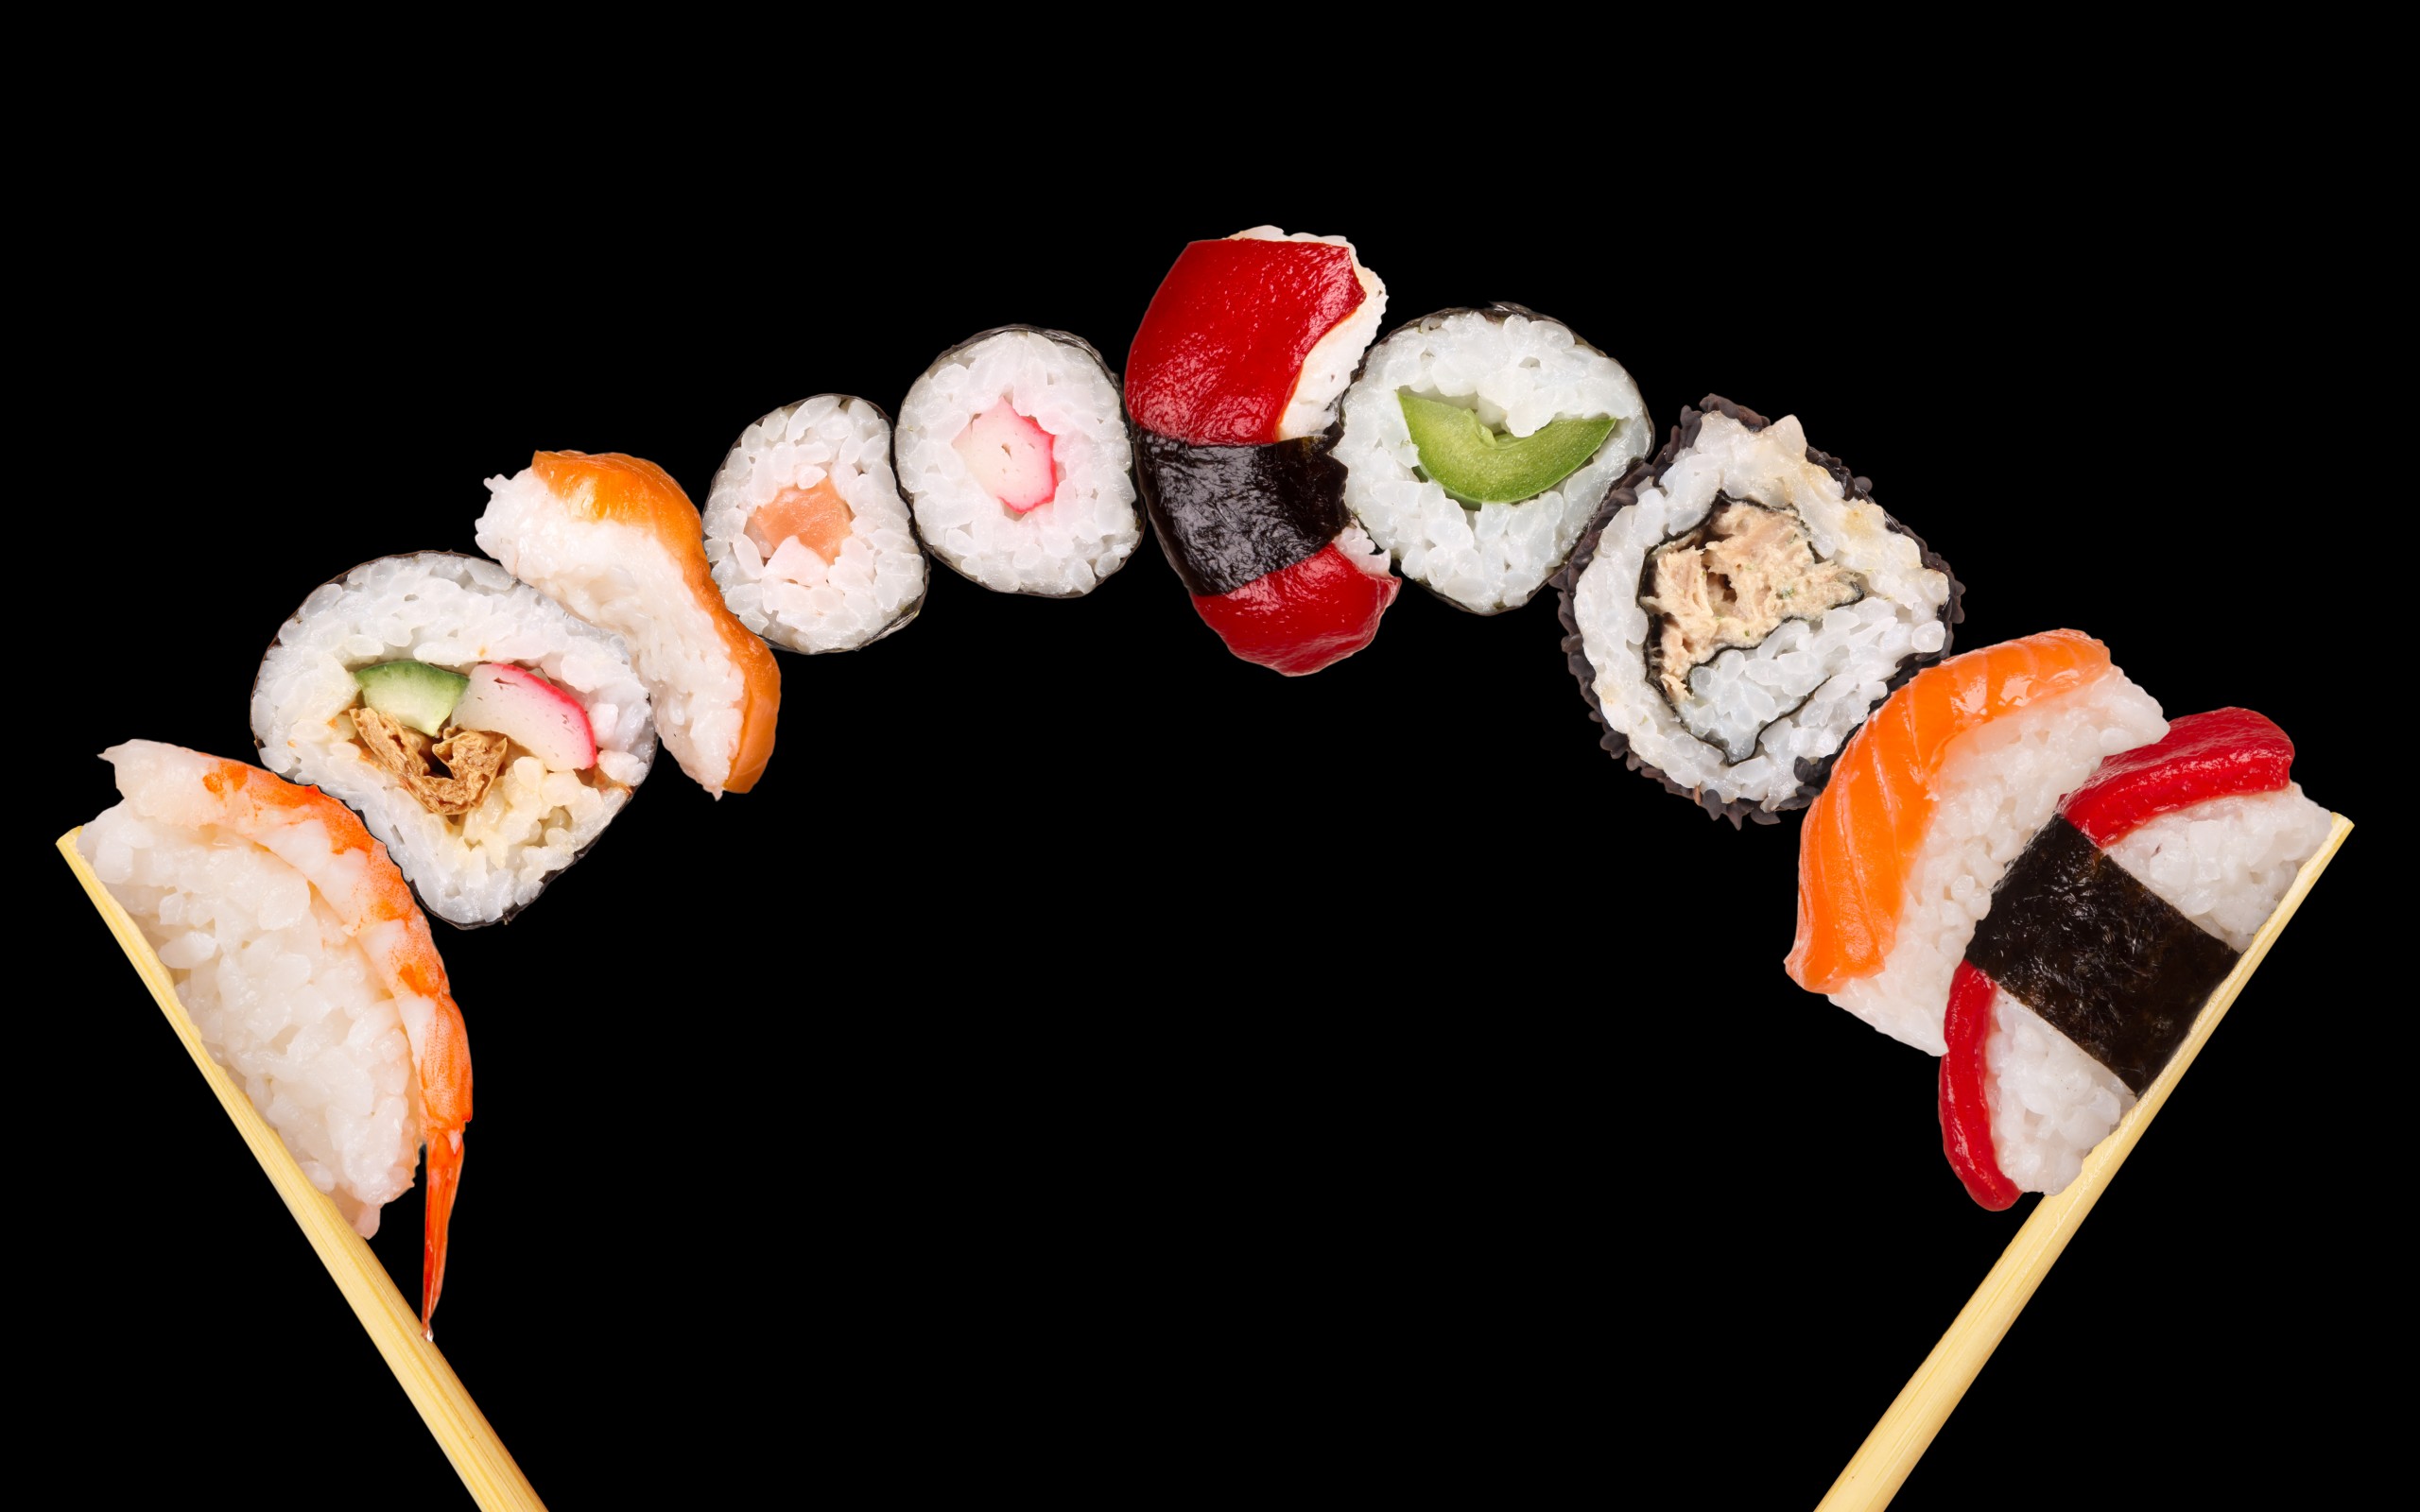 20997 Sushi Wallpaper Images Stock Photos  Vectors  Shutterstock